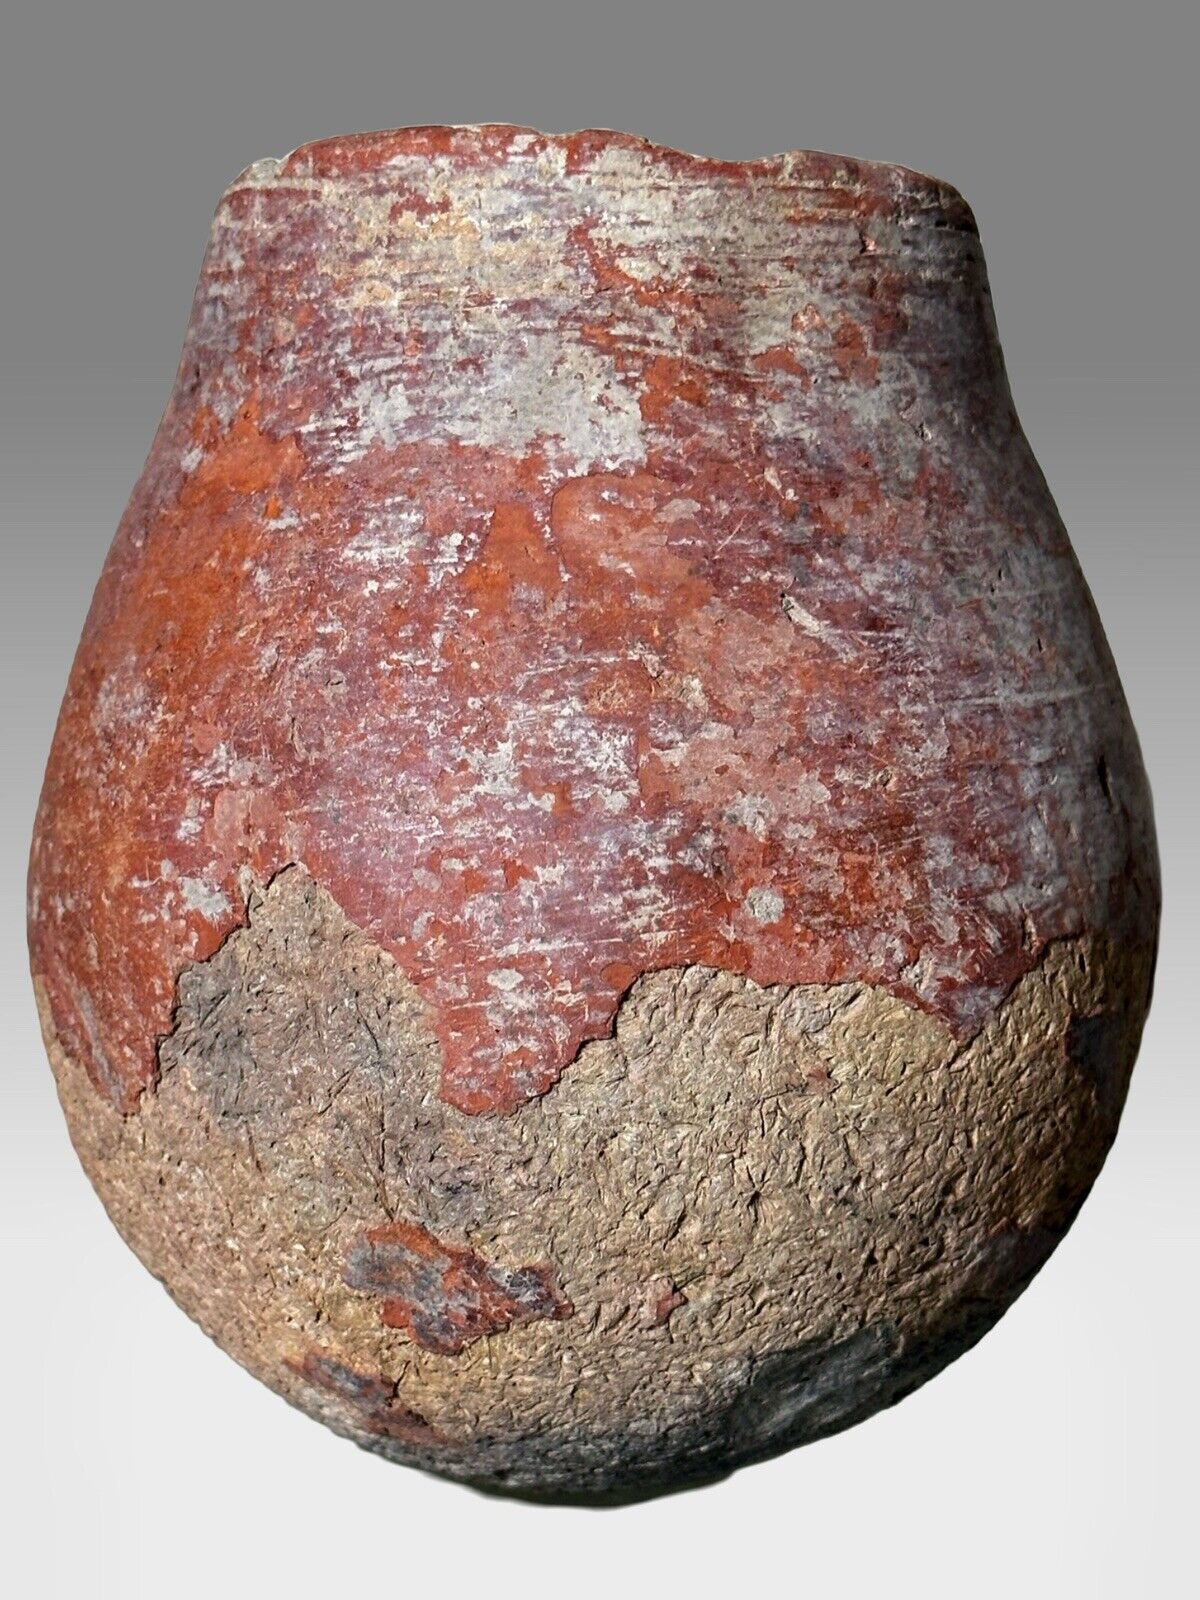 Ancient Mayan Jug Pottery 6 1/2” tall x 6 1/2” wide